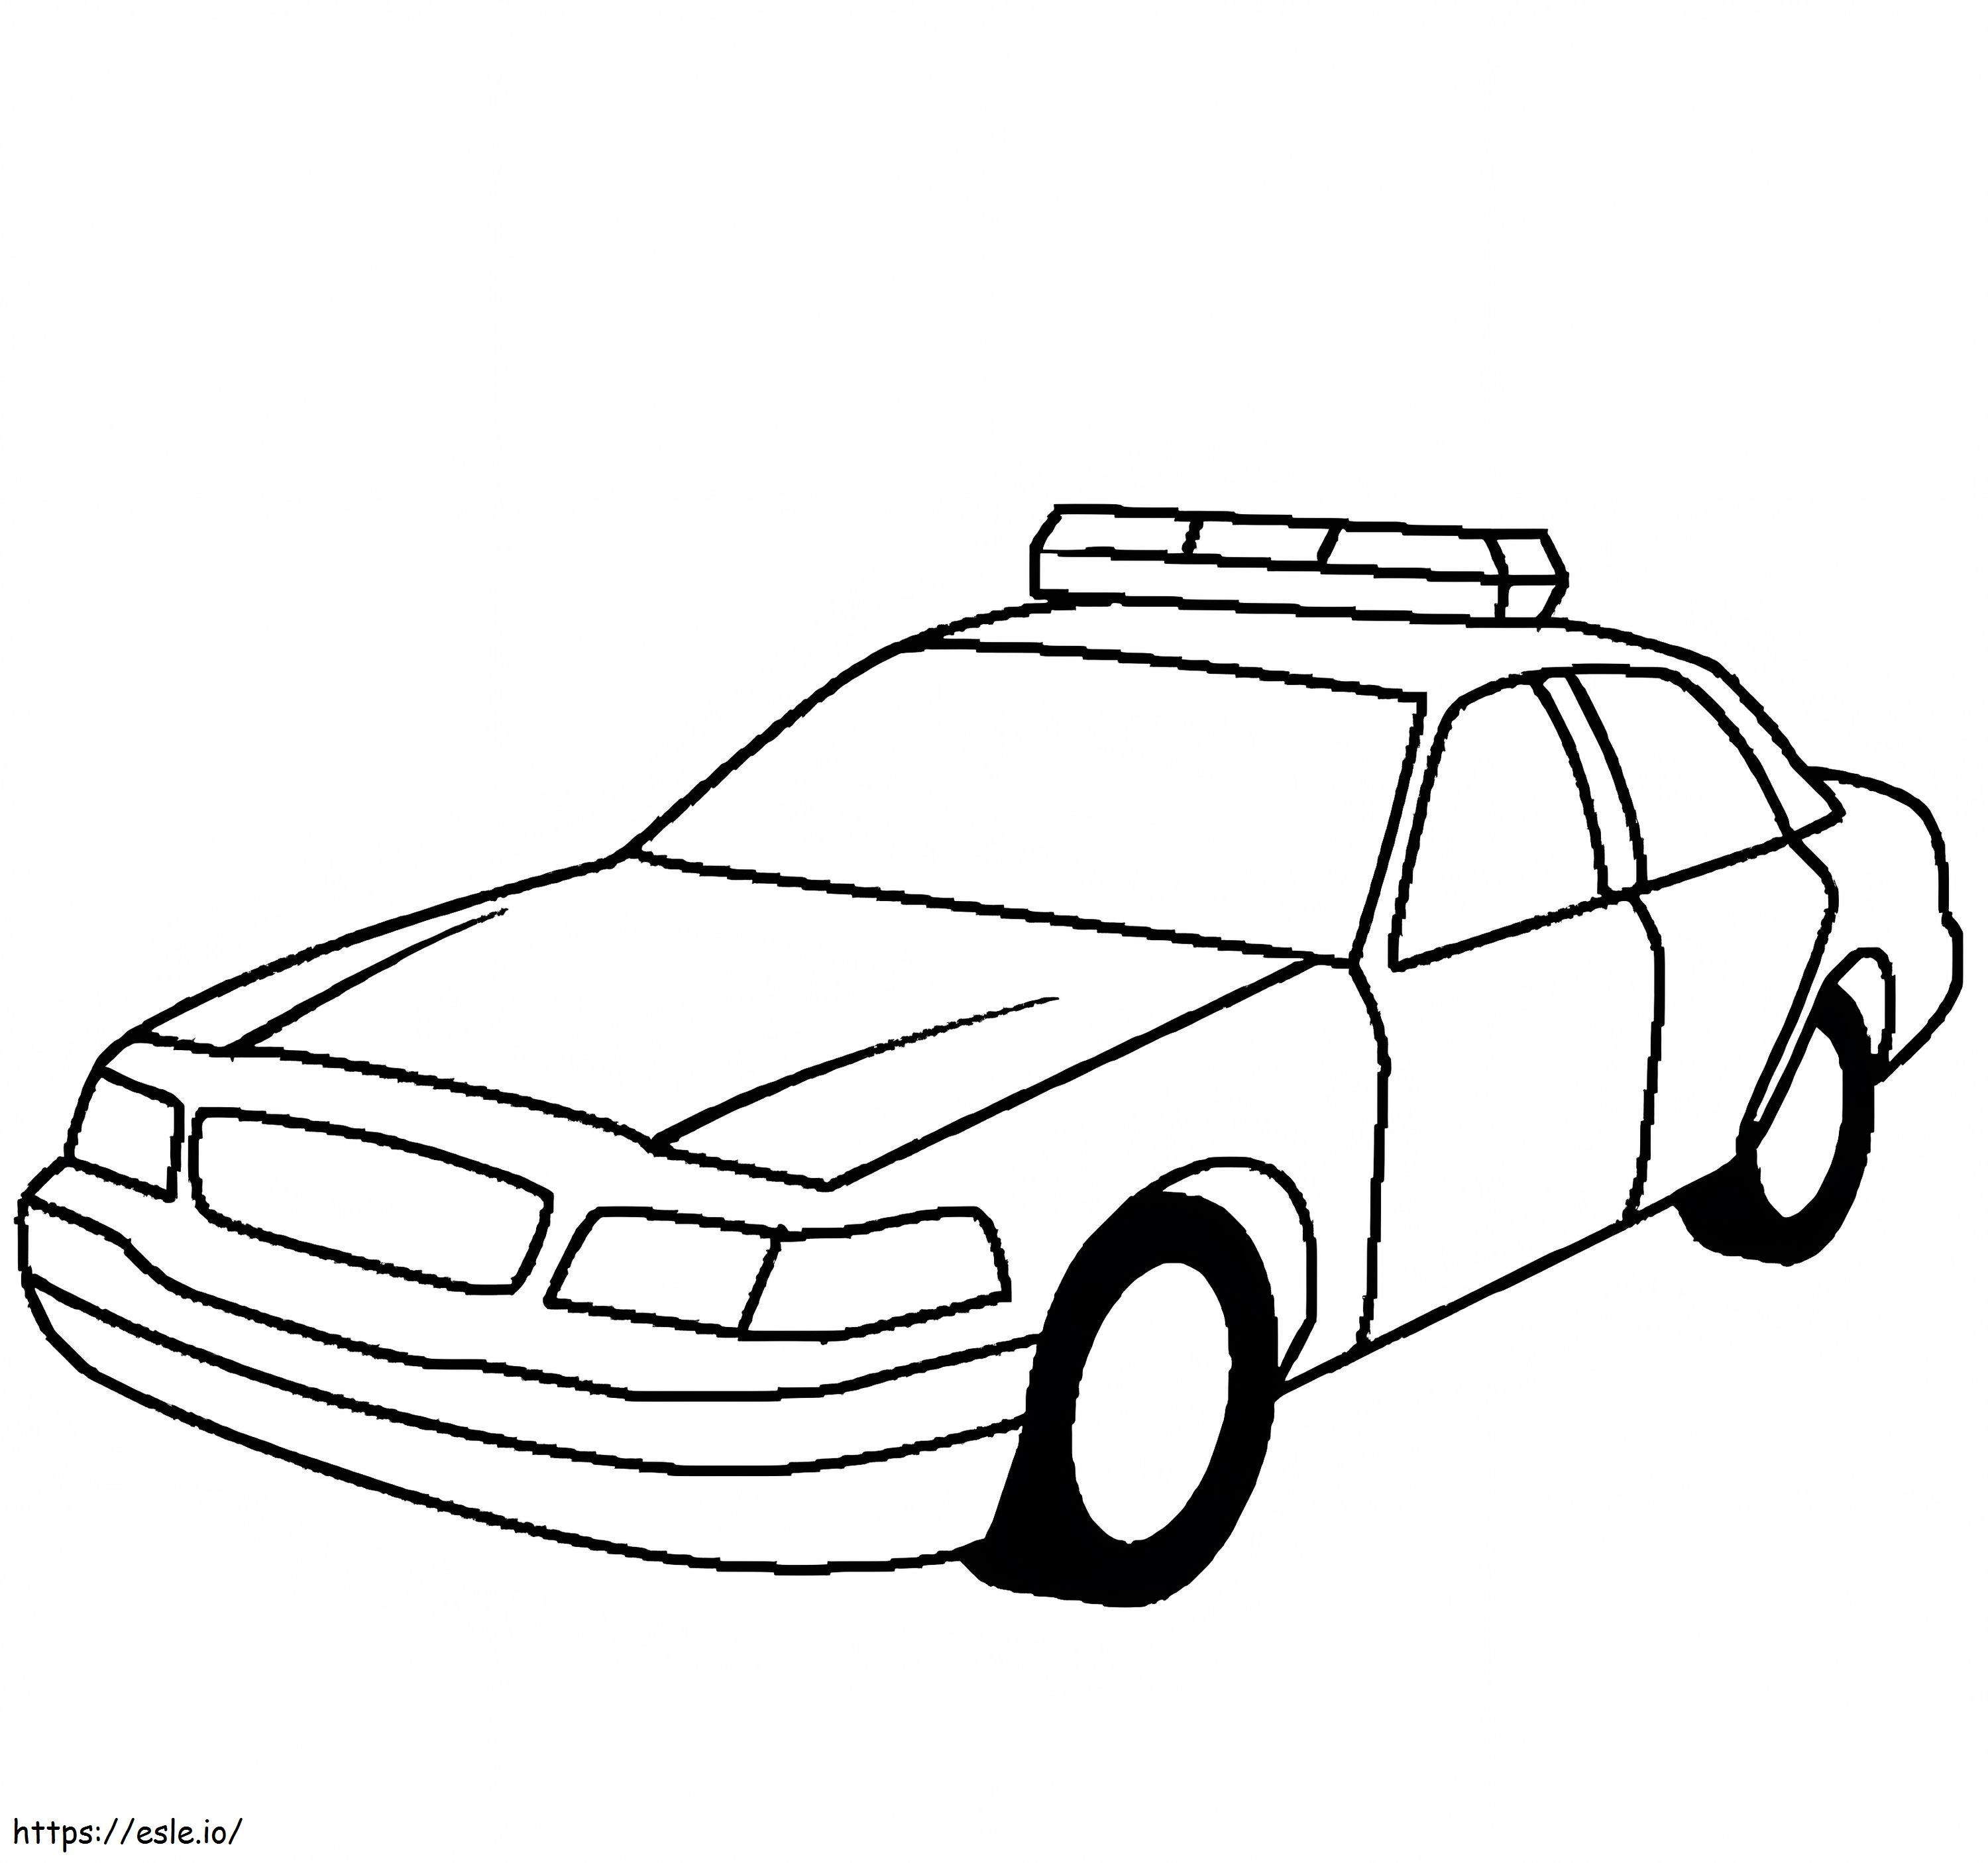 Basis politieauto kleurplaat kleurplaat